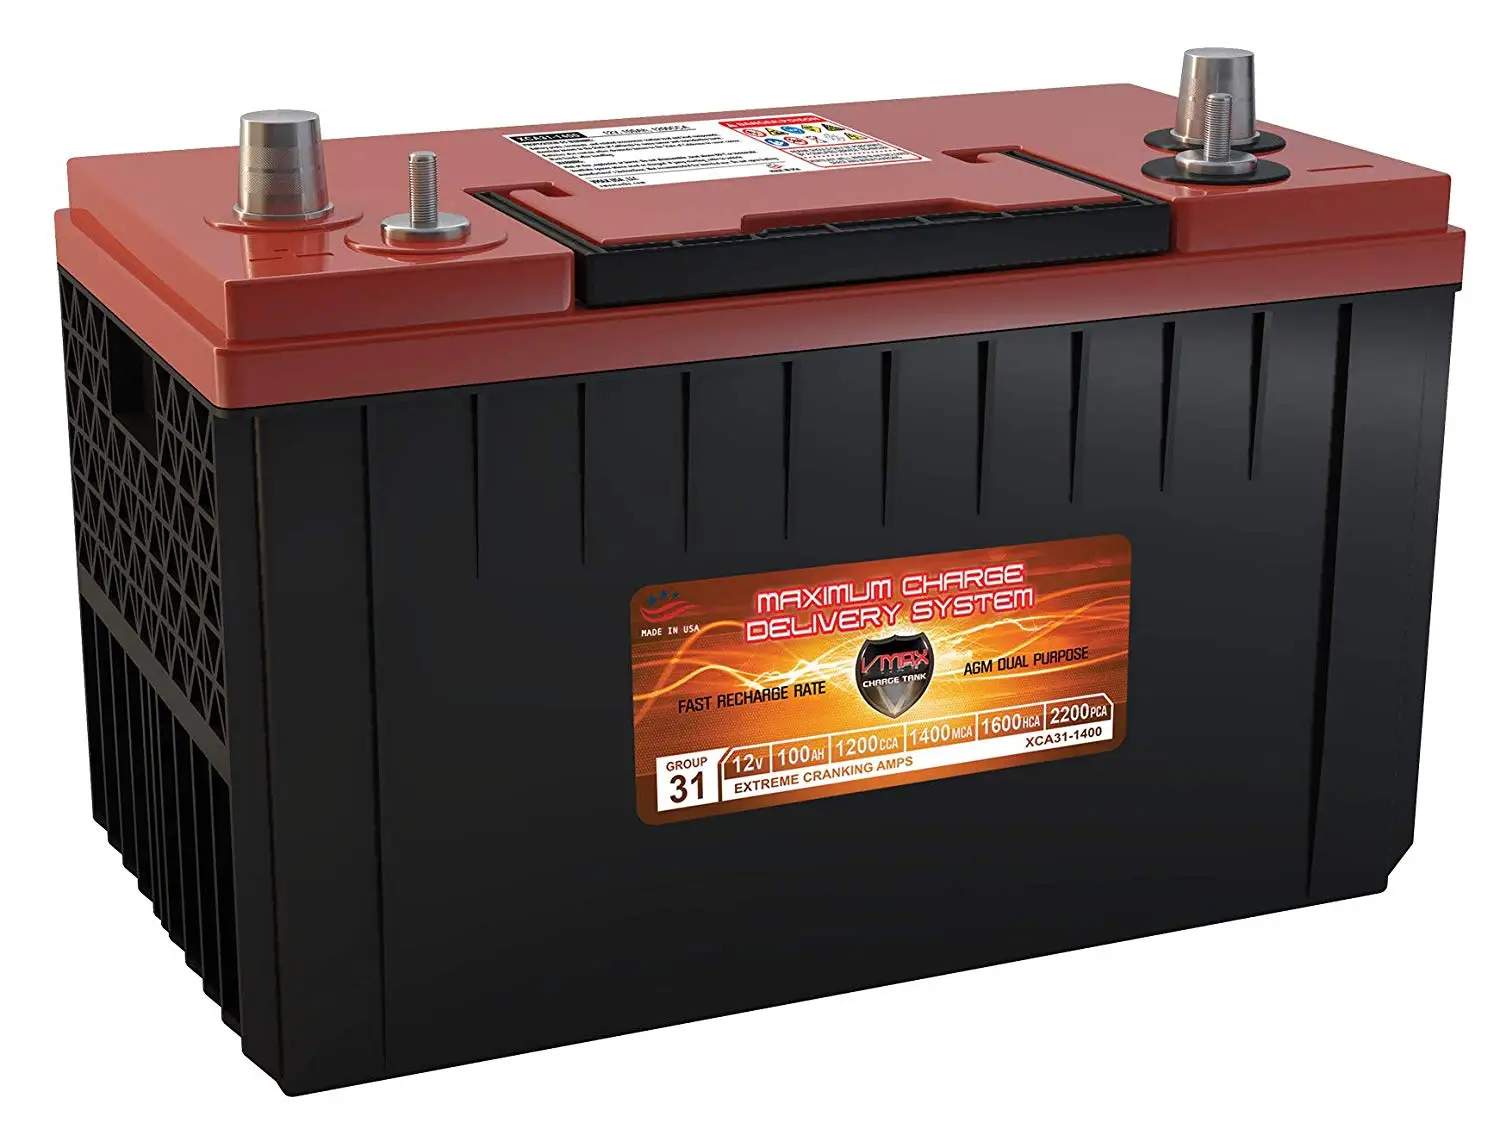 12 volt deep cycle battery for a 99 honda accord